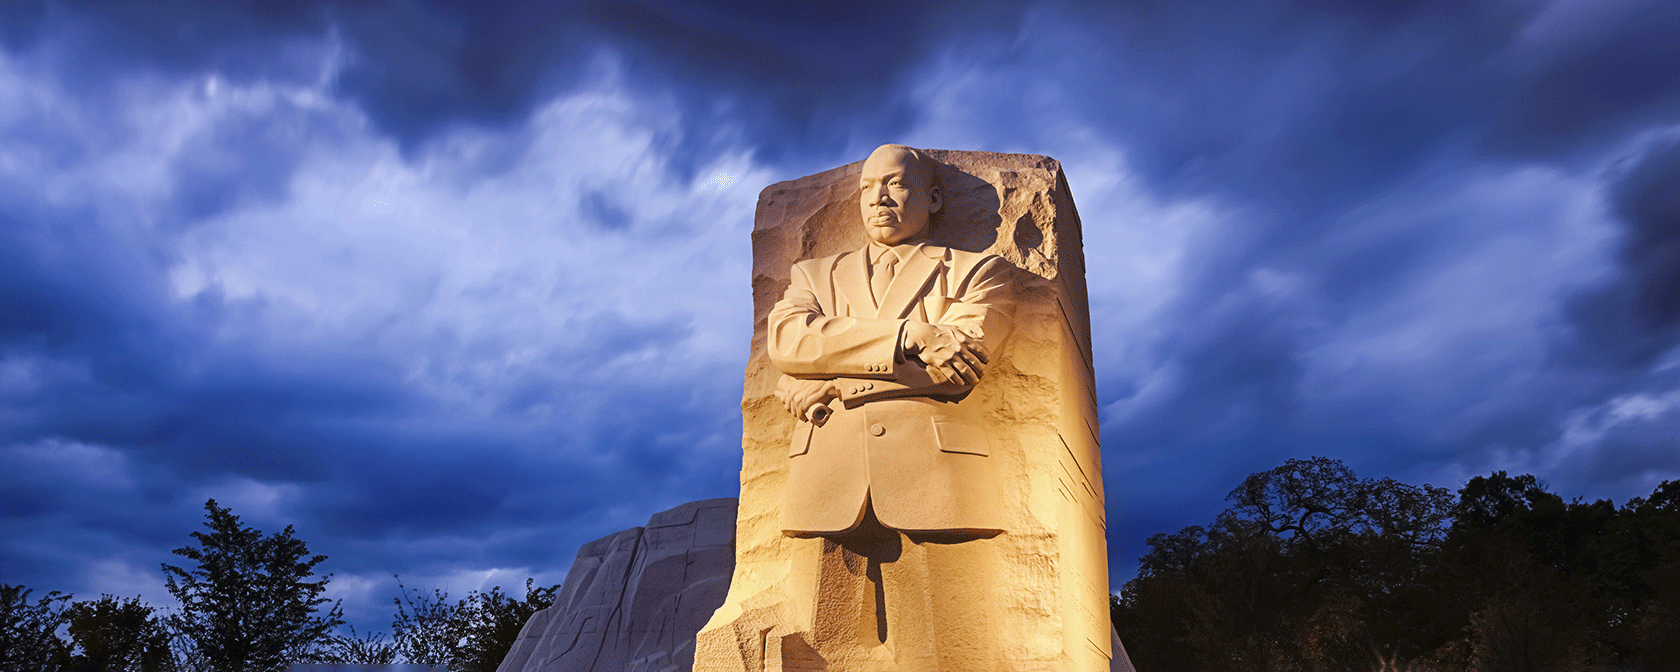 Monumento a Martin Luther King Jr. en la noche